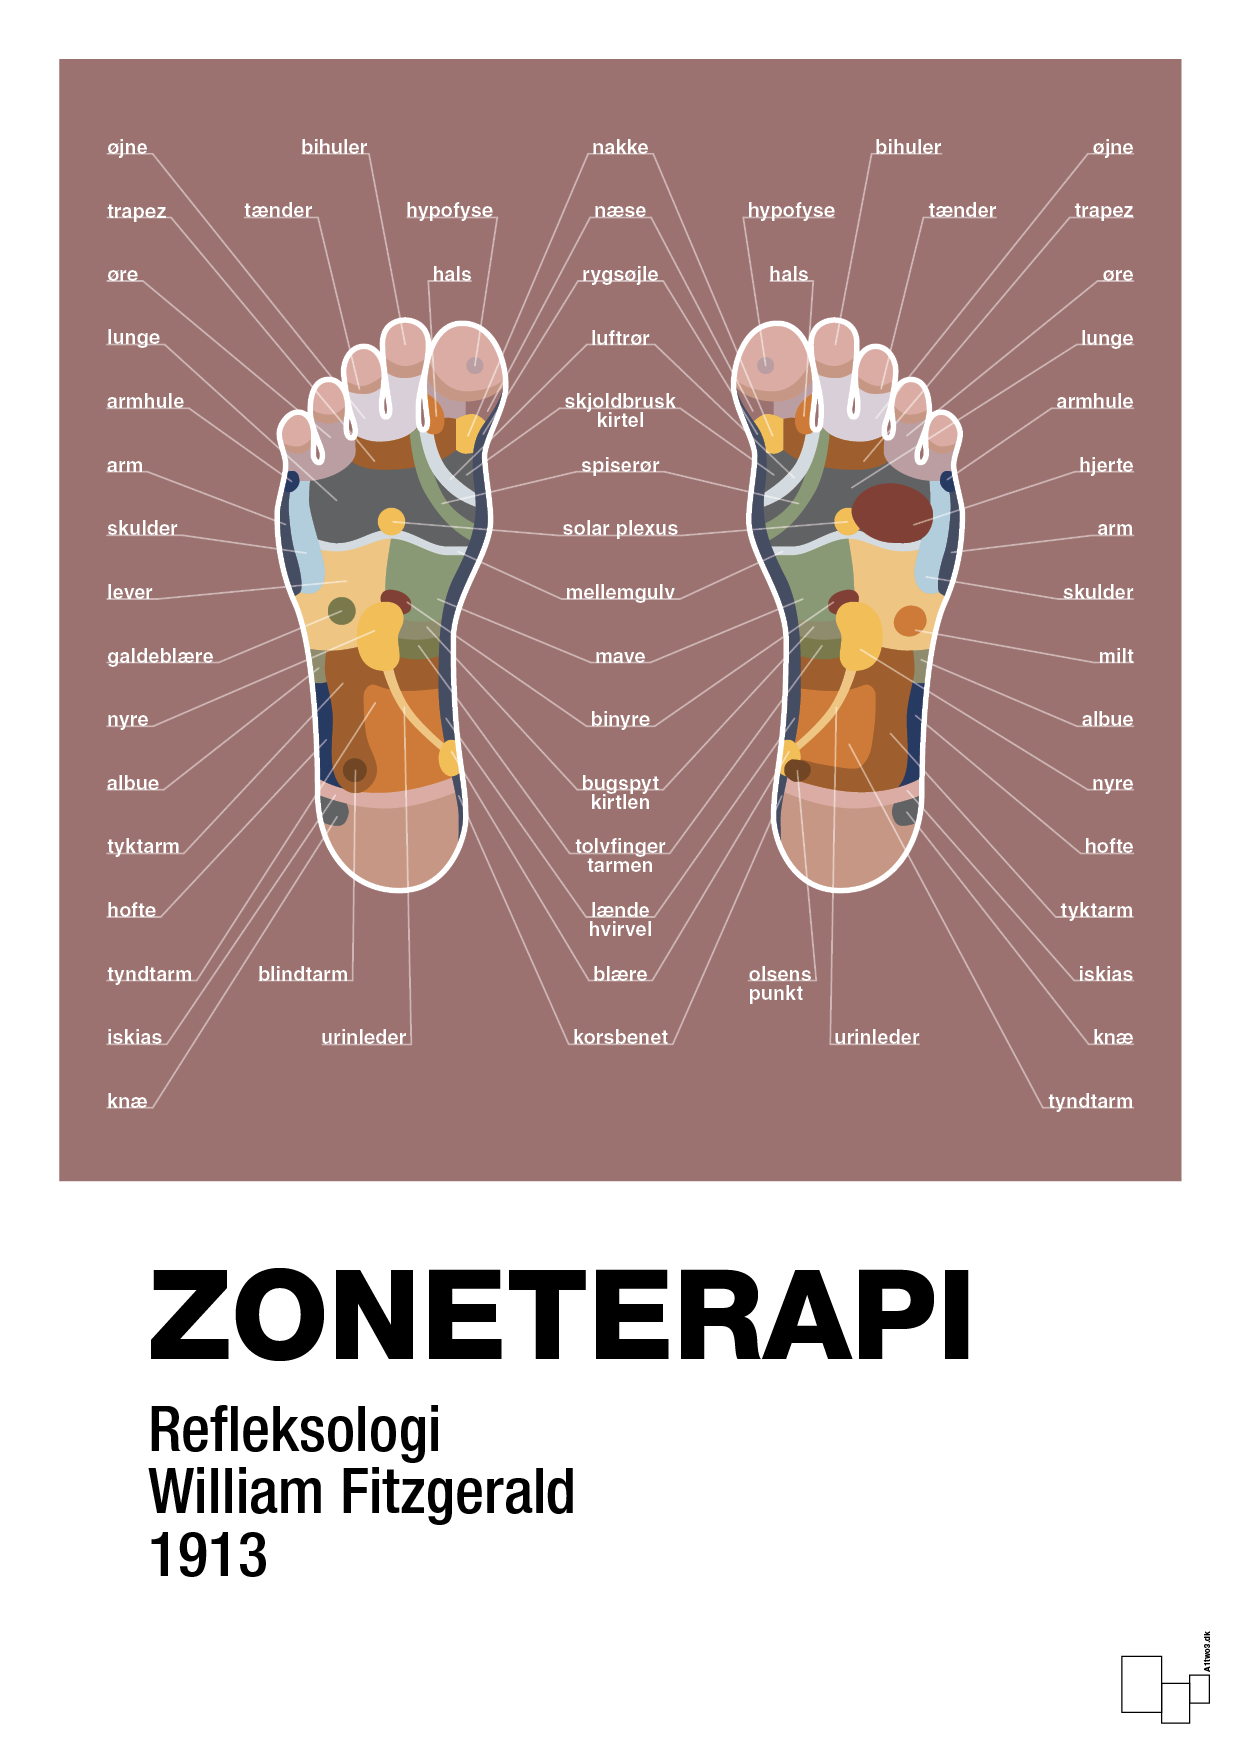 zoneterapi - Plakat med Videnskab i Plum